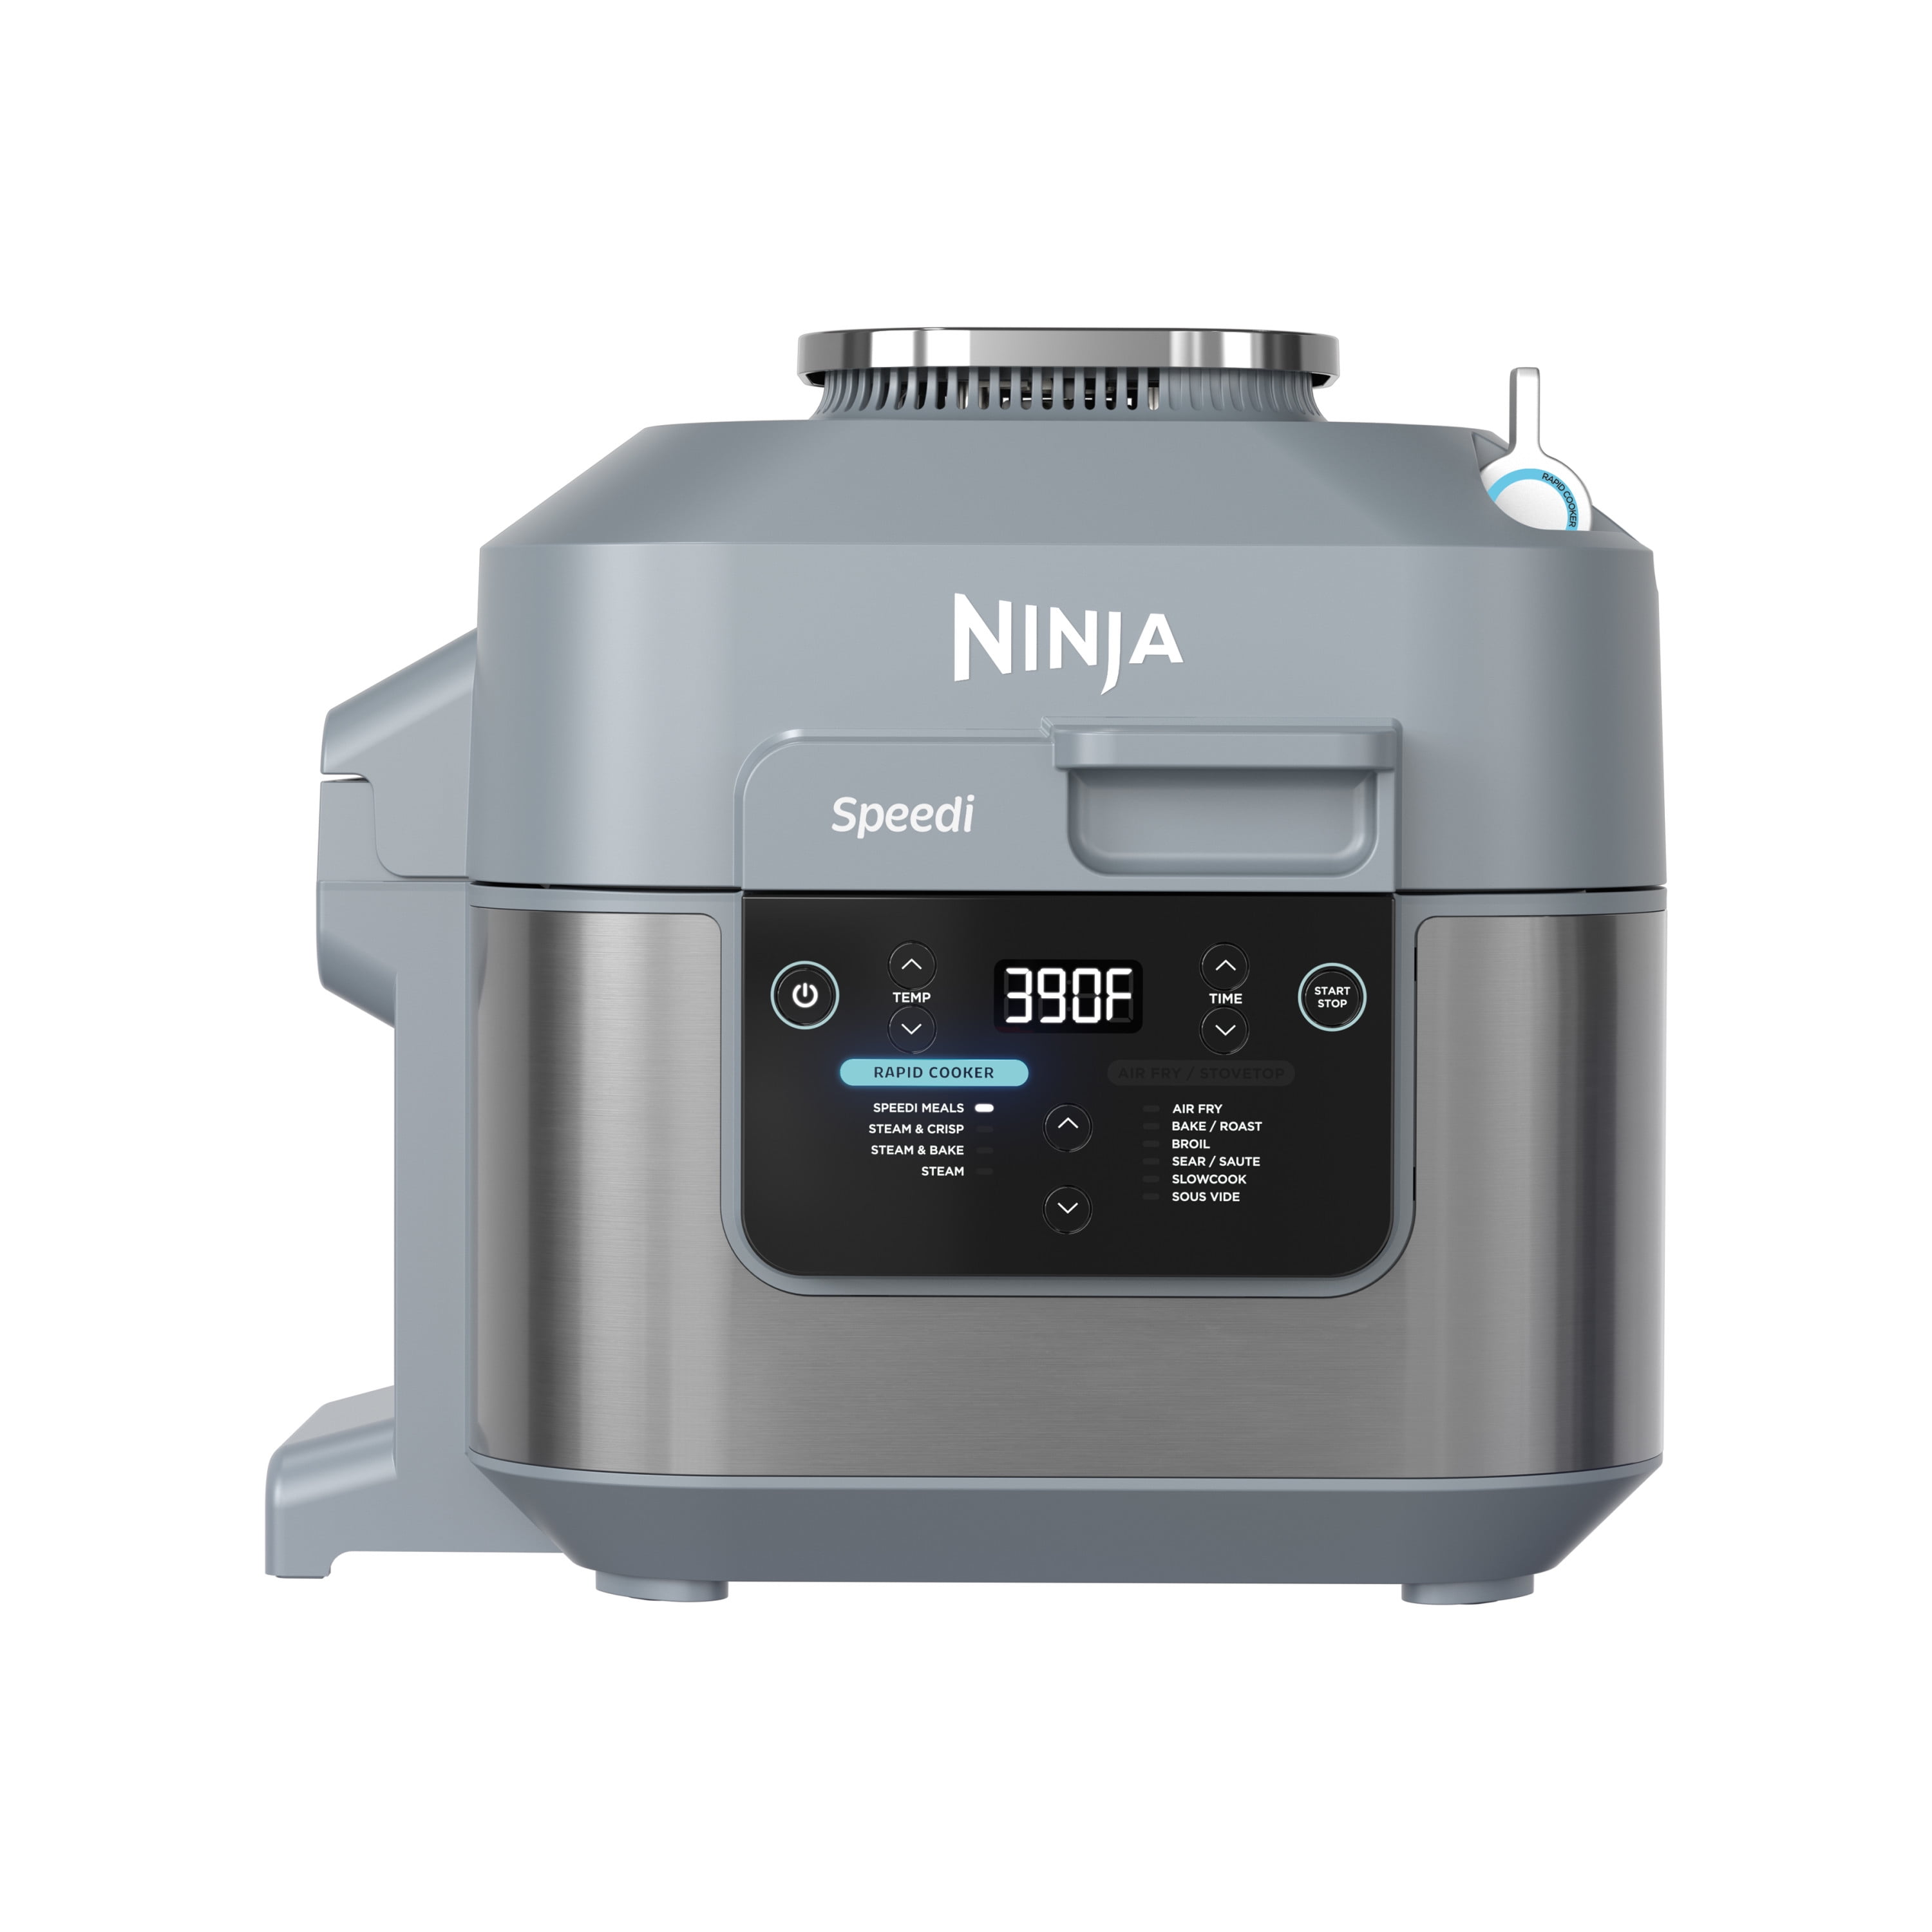 Ninja Speedi Rapid Cooker & Air Fryer, SF300, 6-Qt. Capacity, 10-in-1 Functionality, Meal Maker, Sea Salt Gray